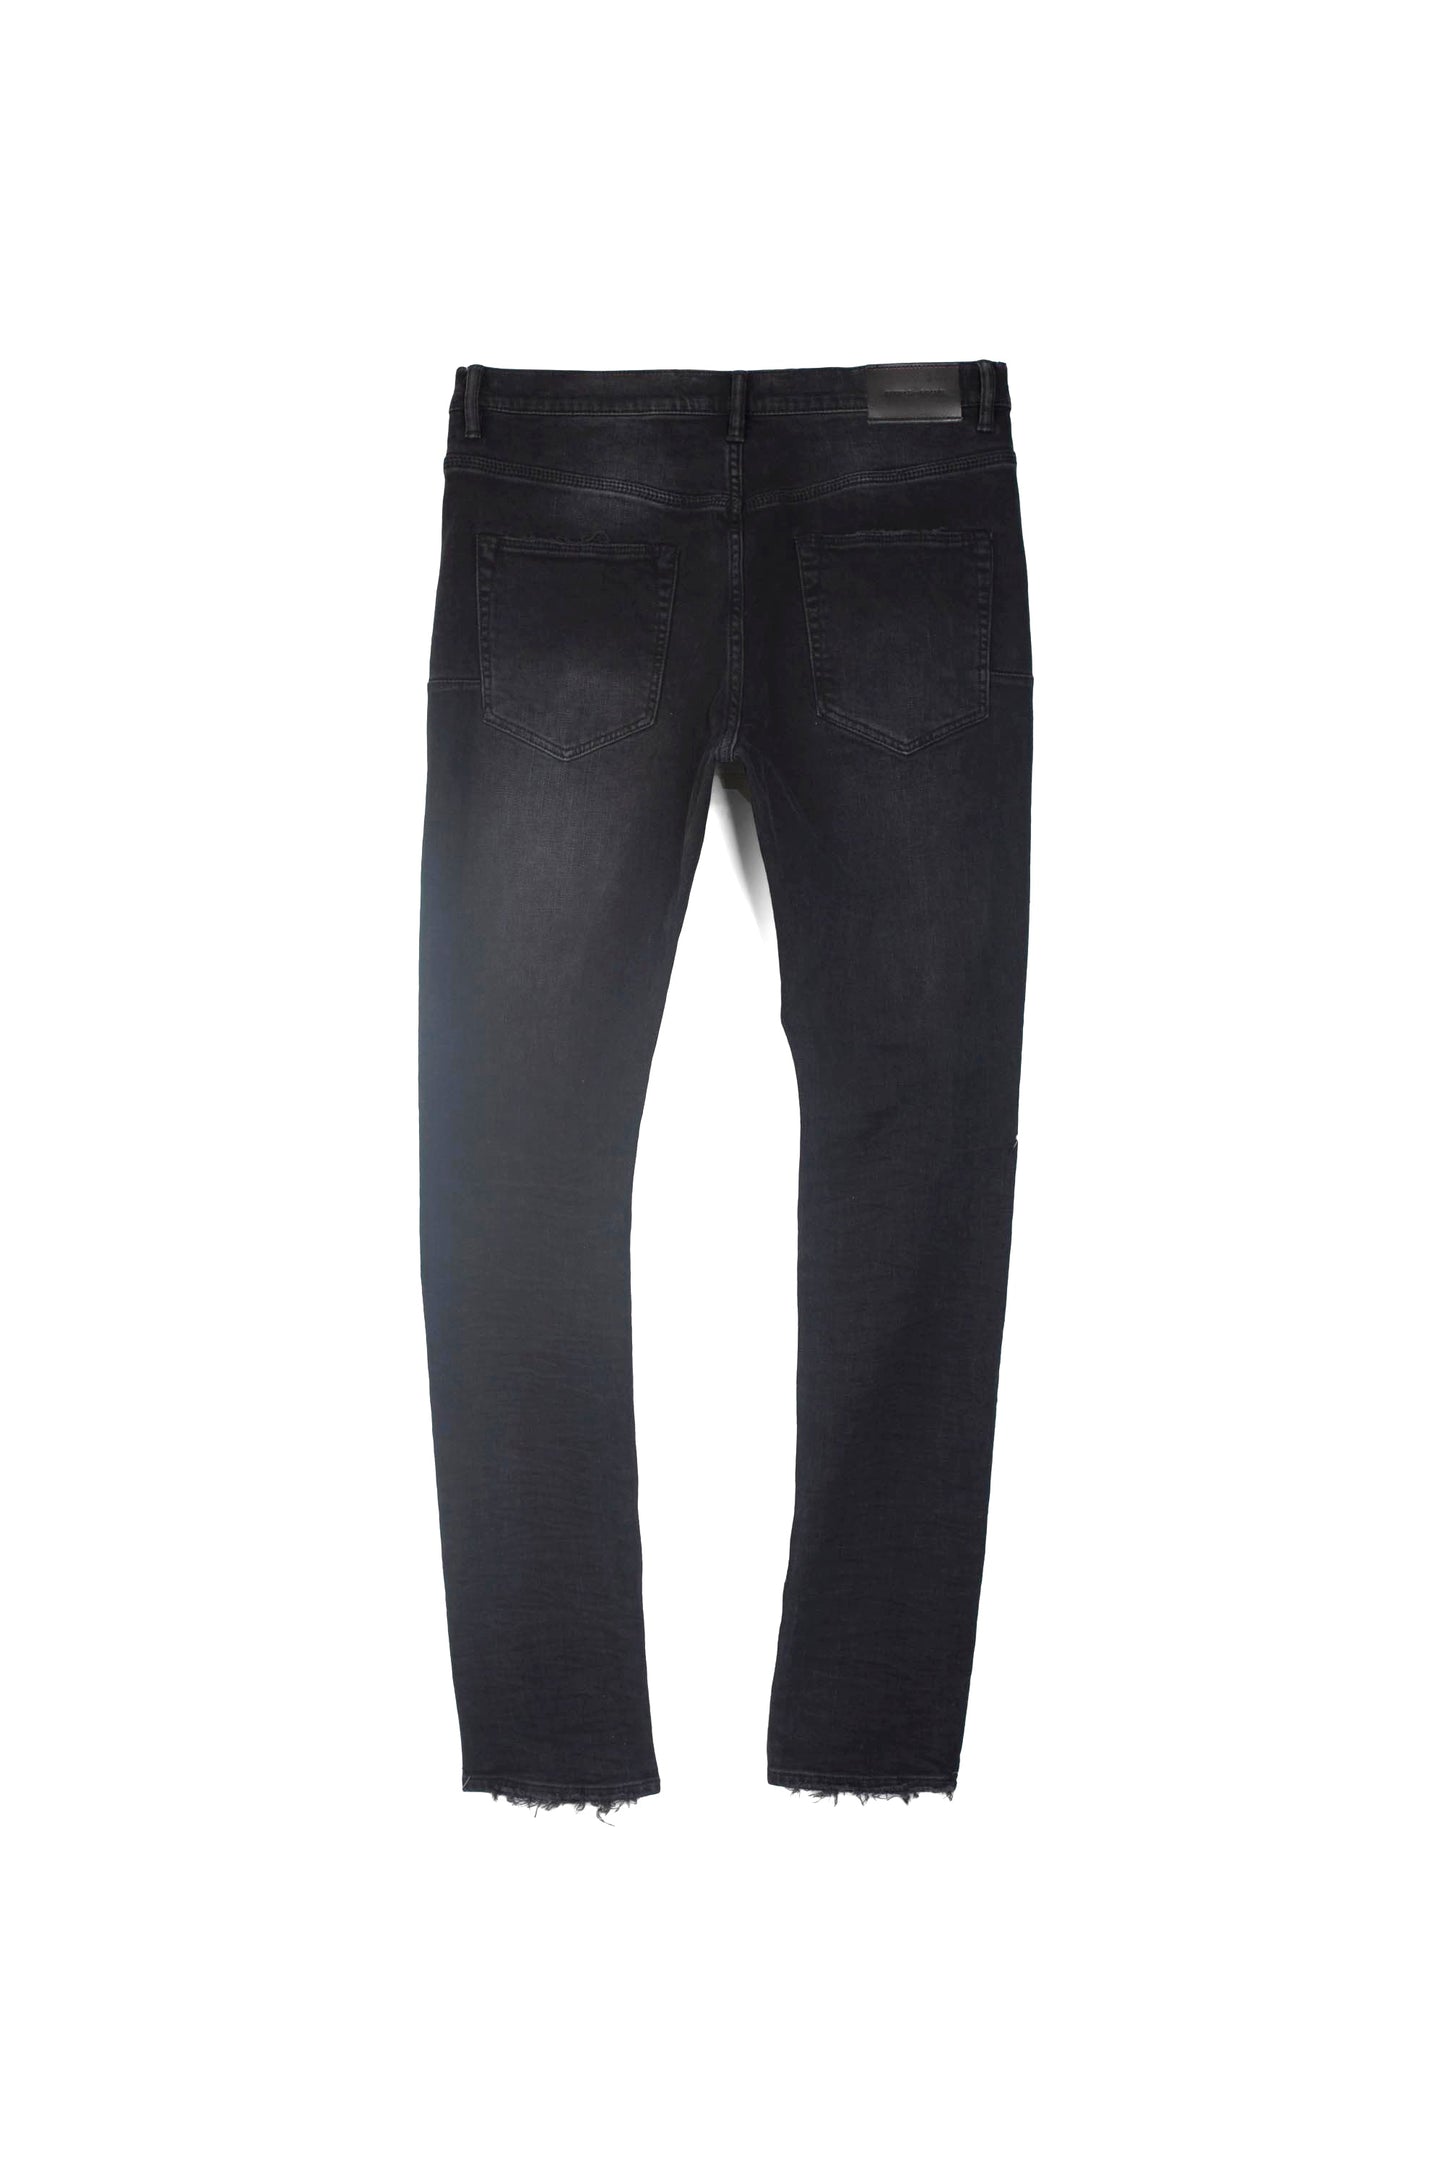 mens purple brand denim jean mid rise slim style no. p002 black repair back